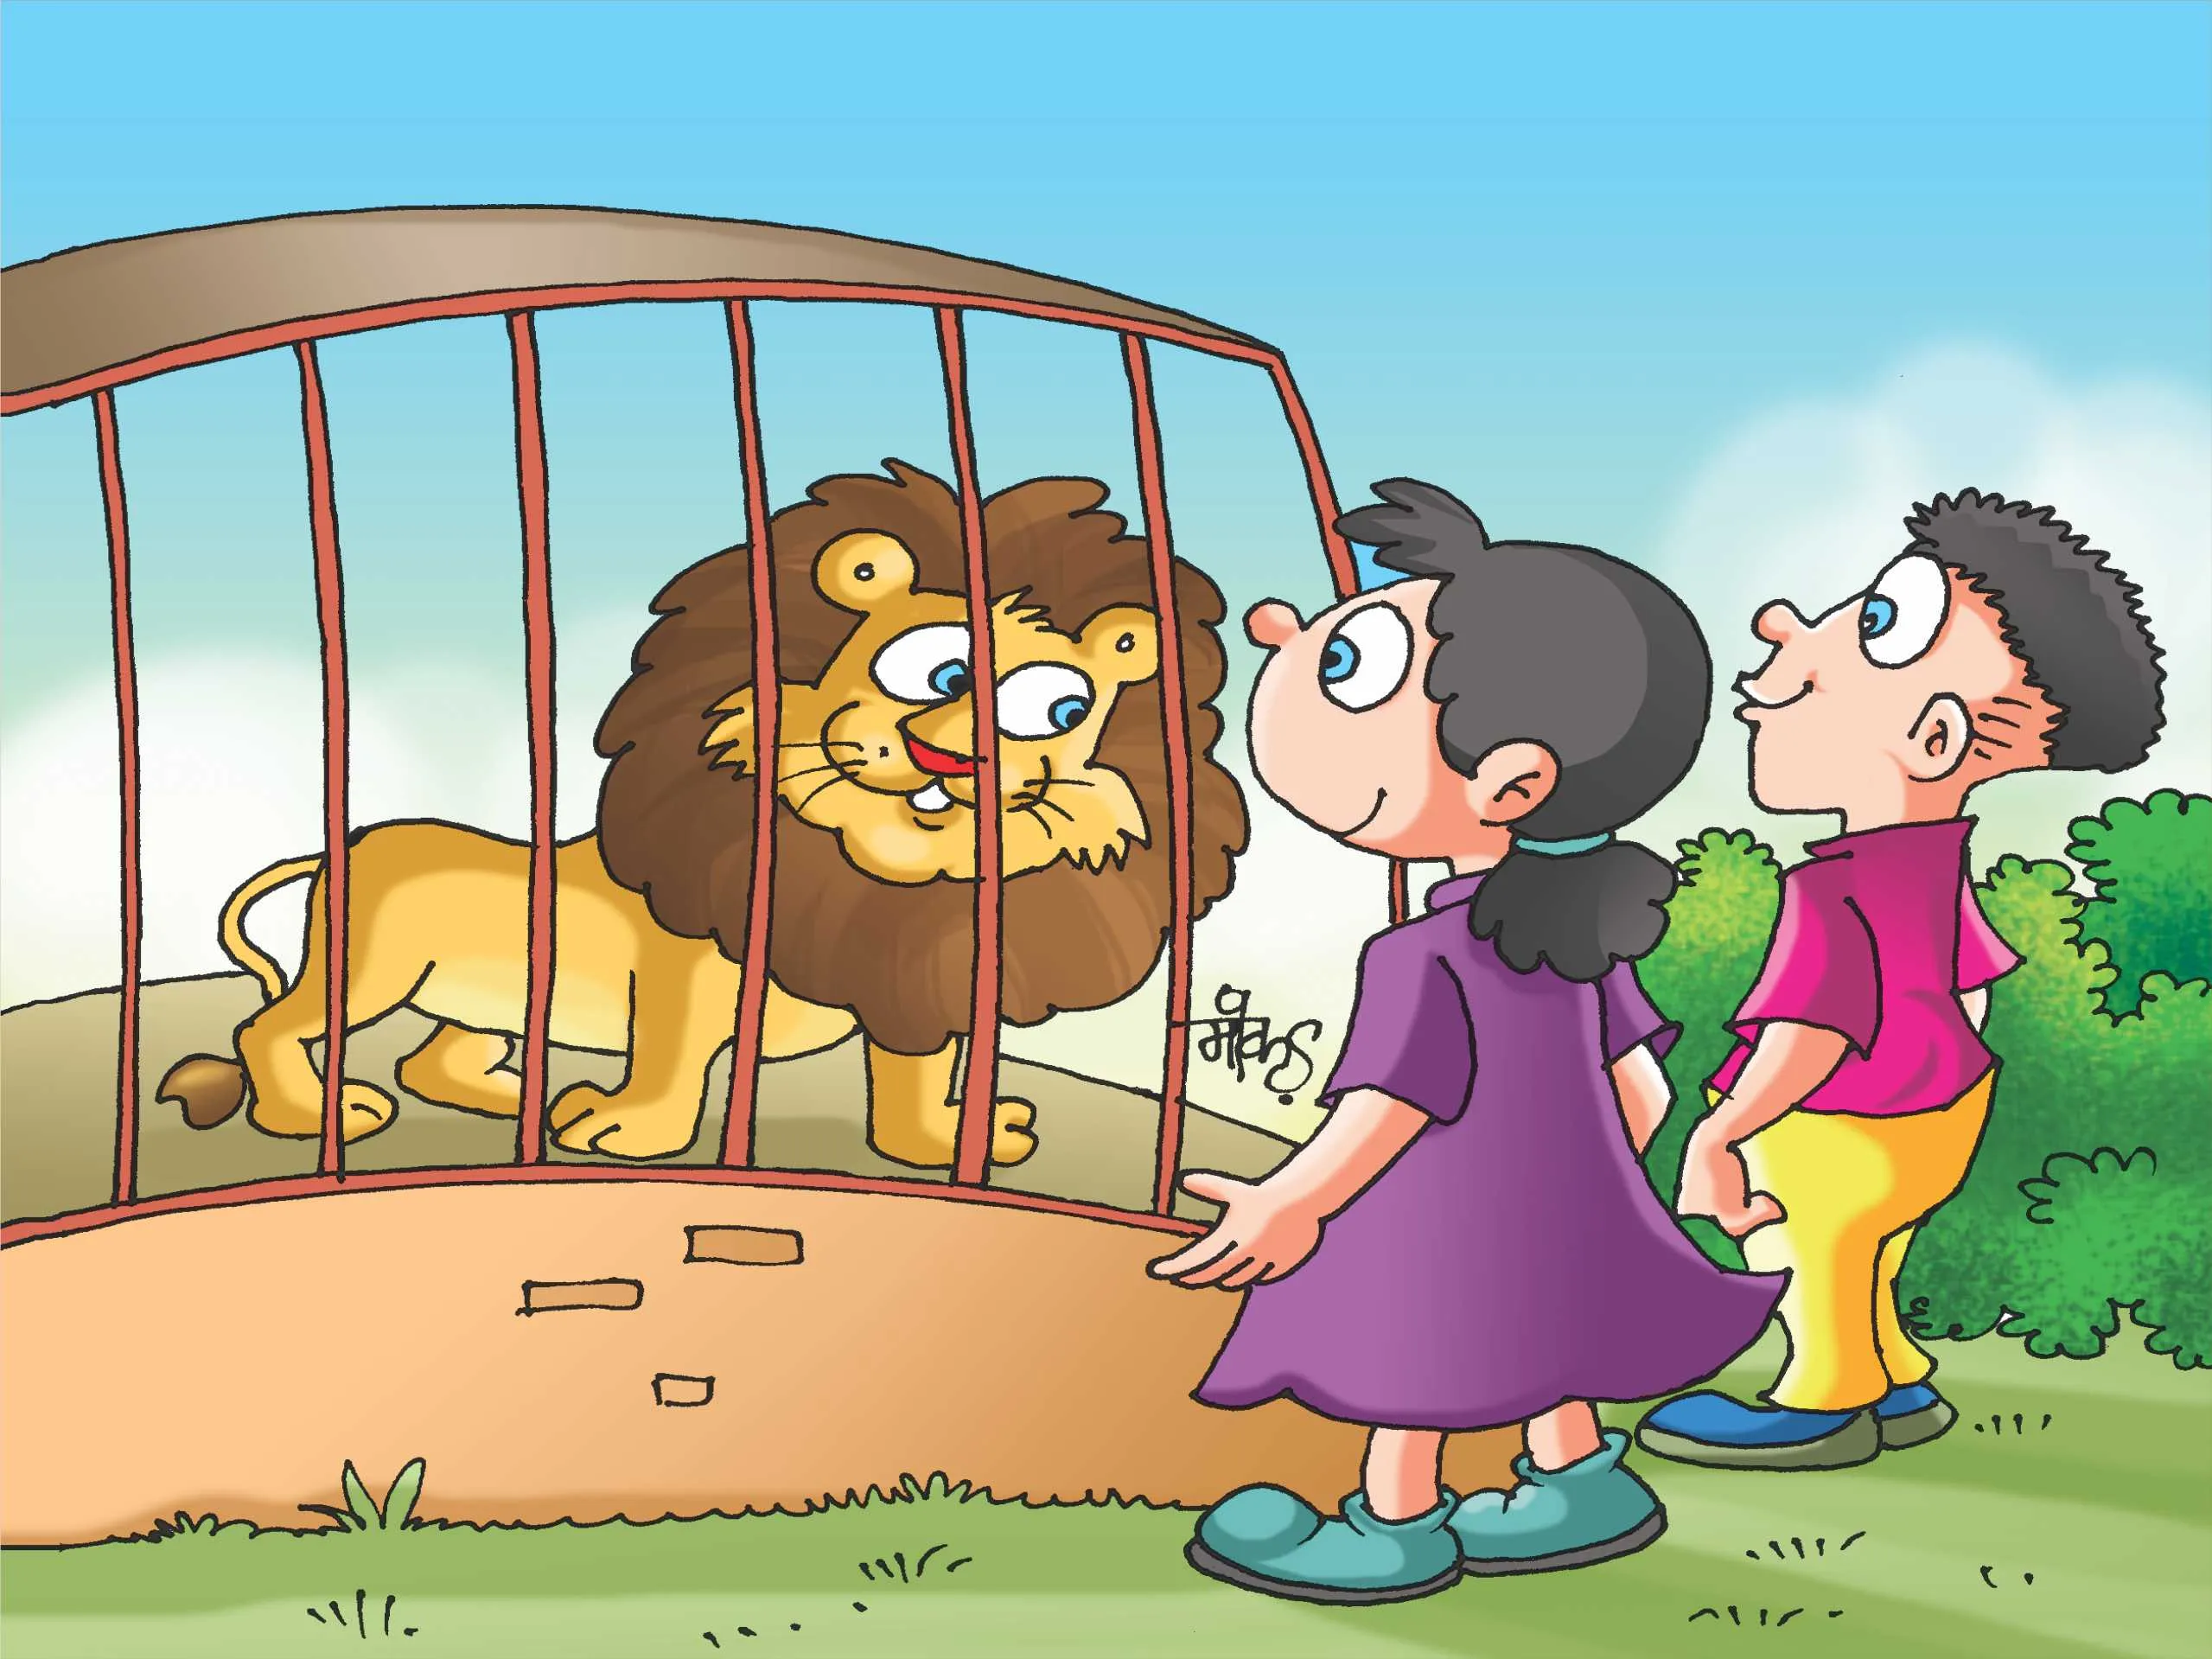 Lion in Zoo cartoon image